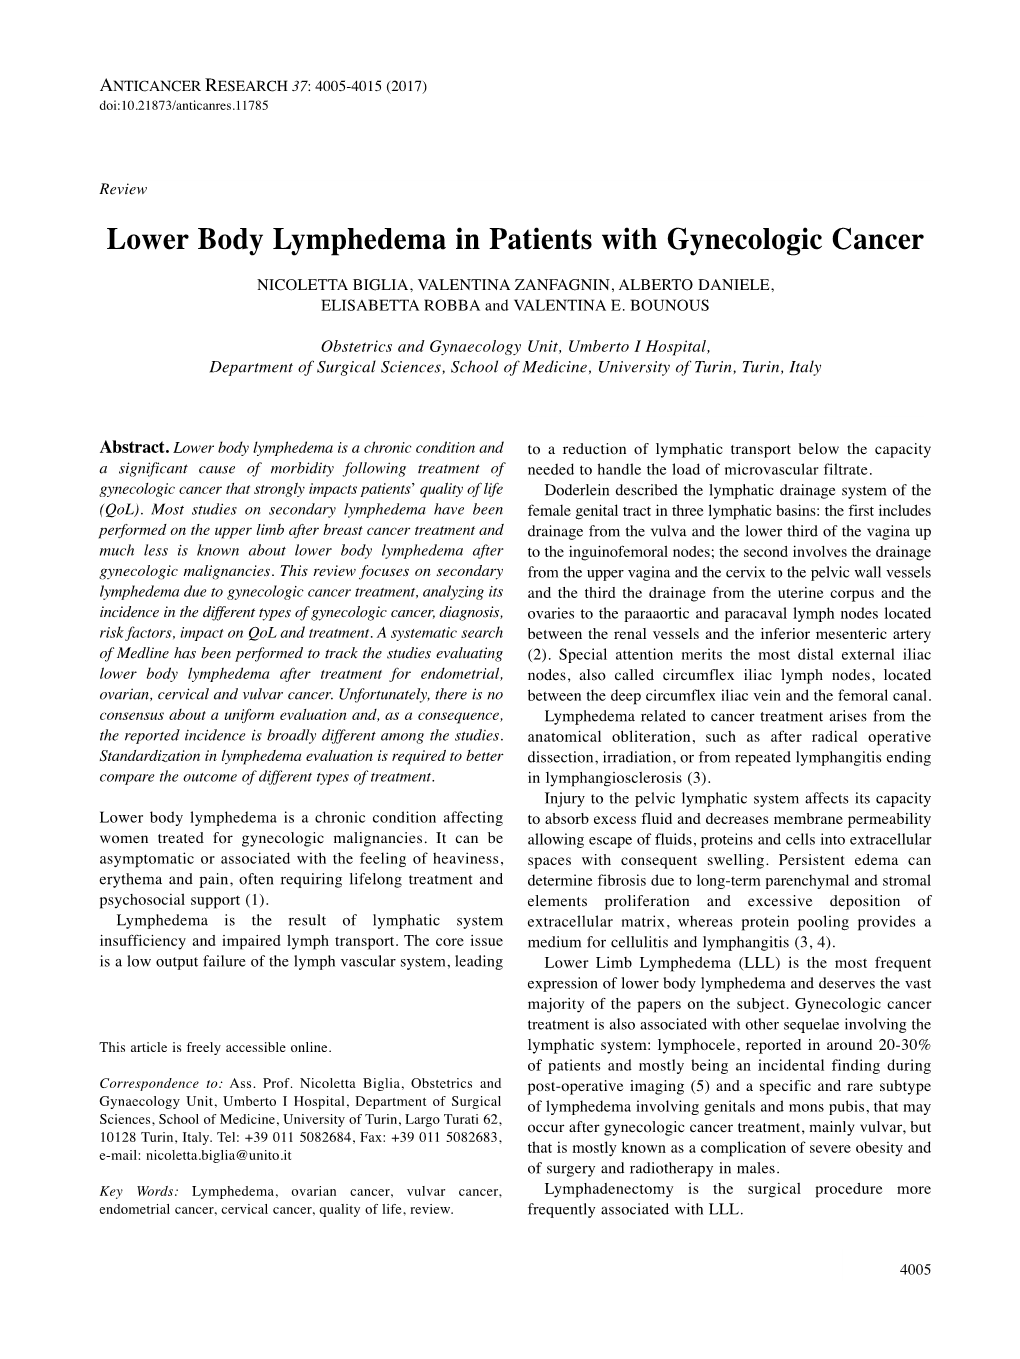 Lower Body Lymphedema in Patients with Gynecologic Cancer NICOLETTA BIGLIA, VALENTINA ZANFAGNIN, ALBERTO DANIELE, ELISABETTA ROBBA and VALENTINA E